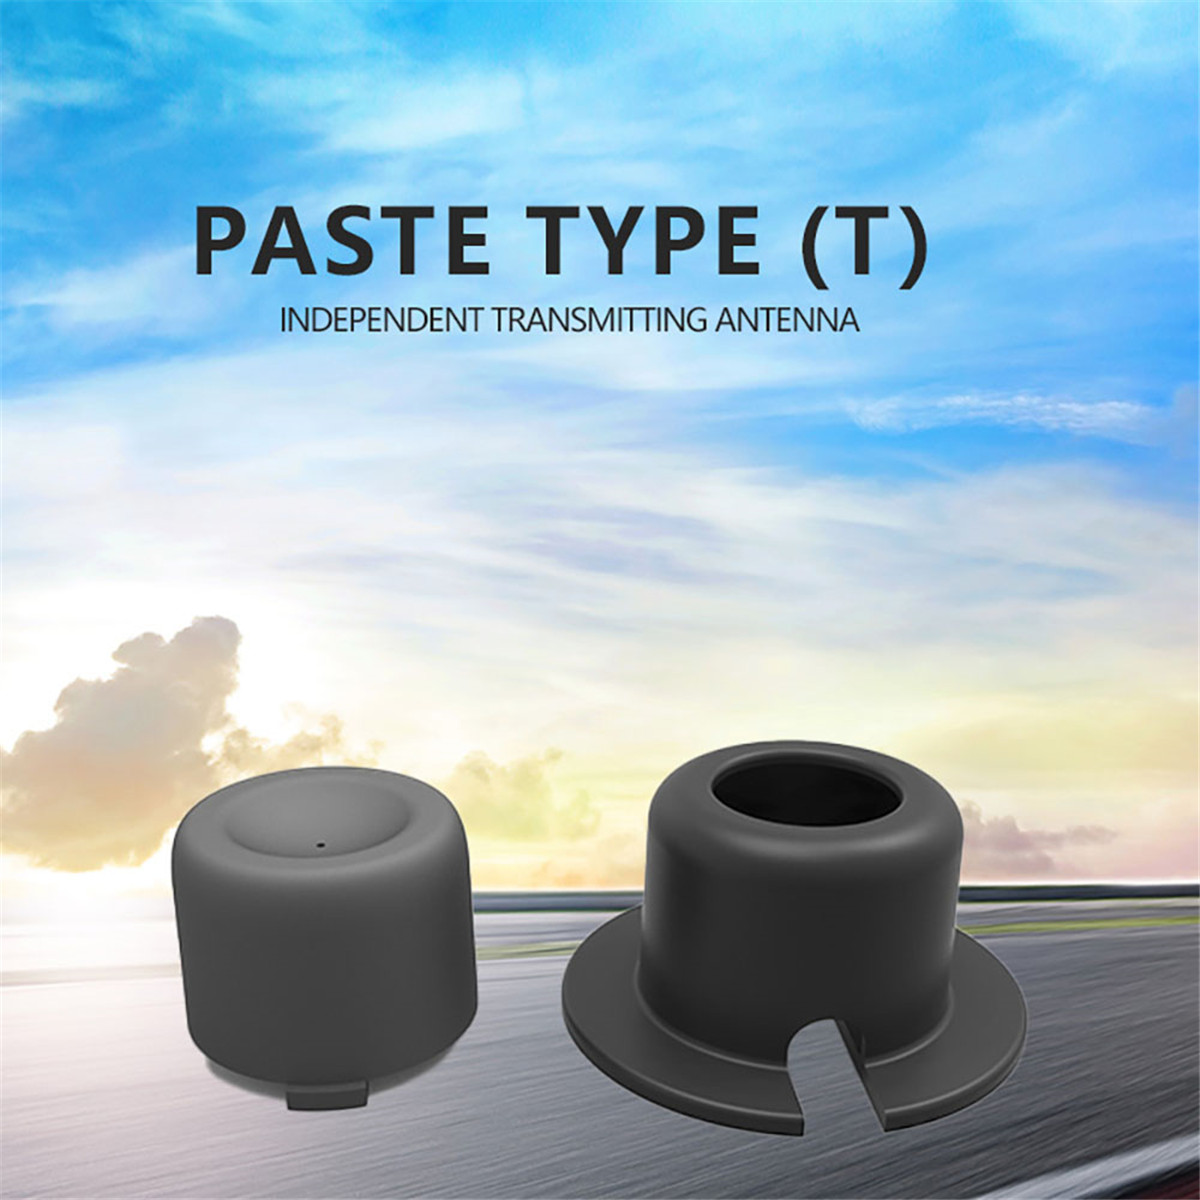 Paste type01 (9)